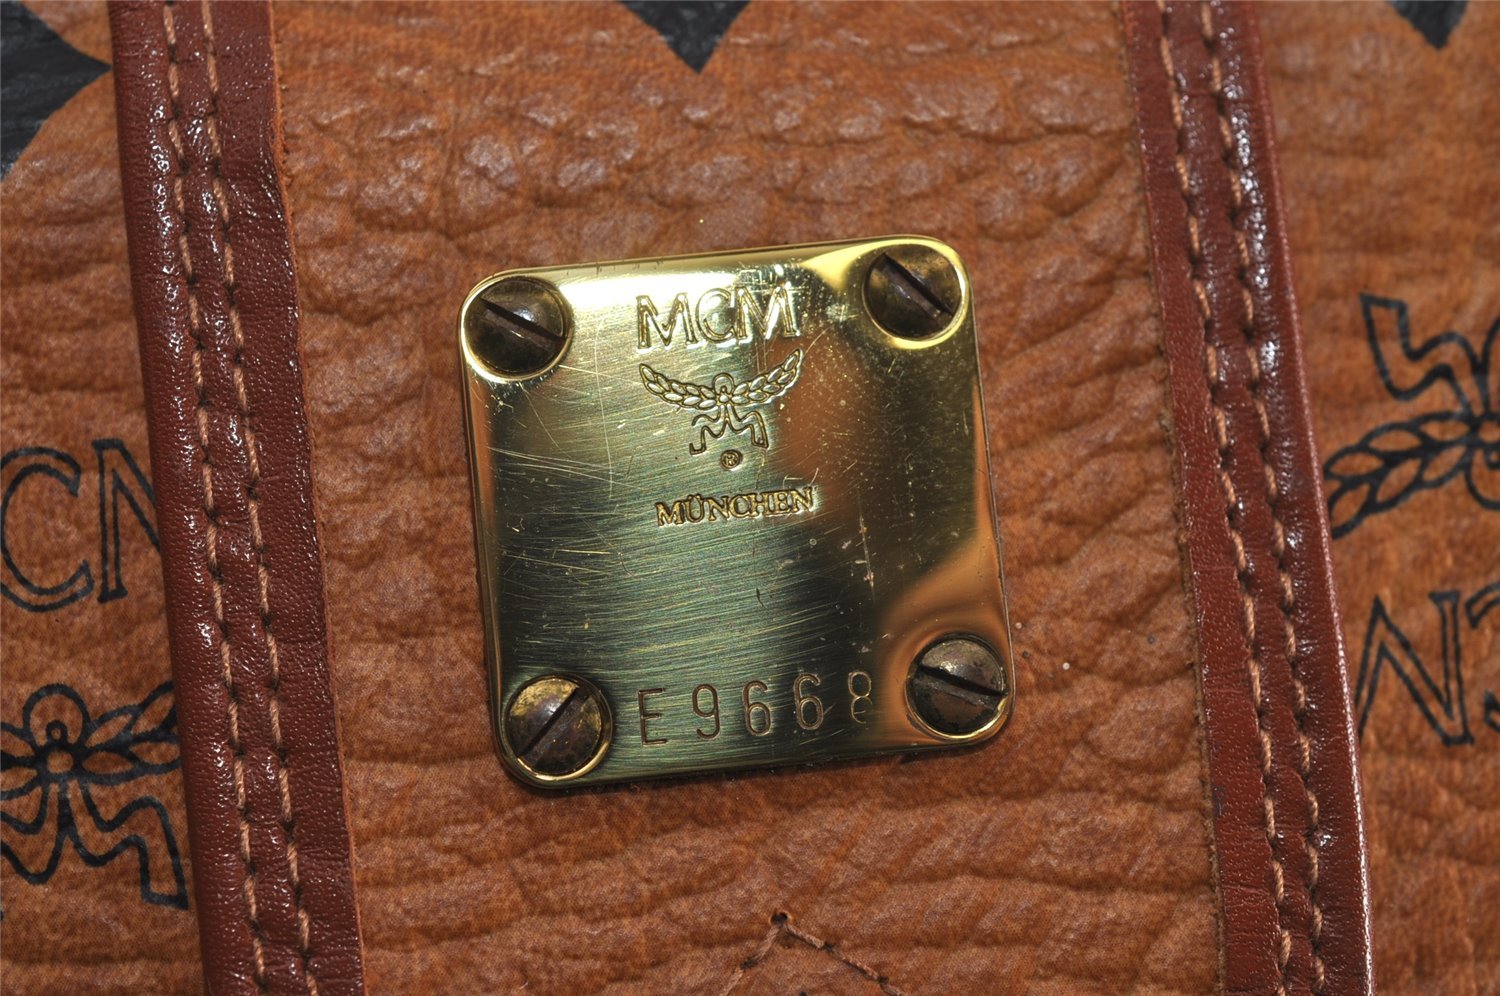 Authentic MCM Vintage Visetos Leather 2Way Travel Boston Bag Brown 1474J